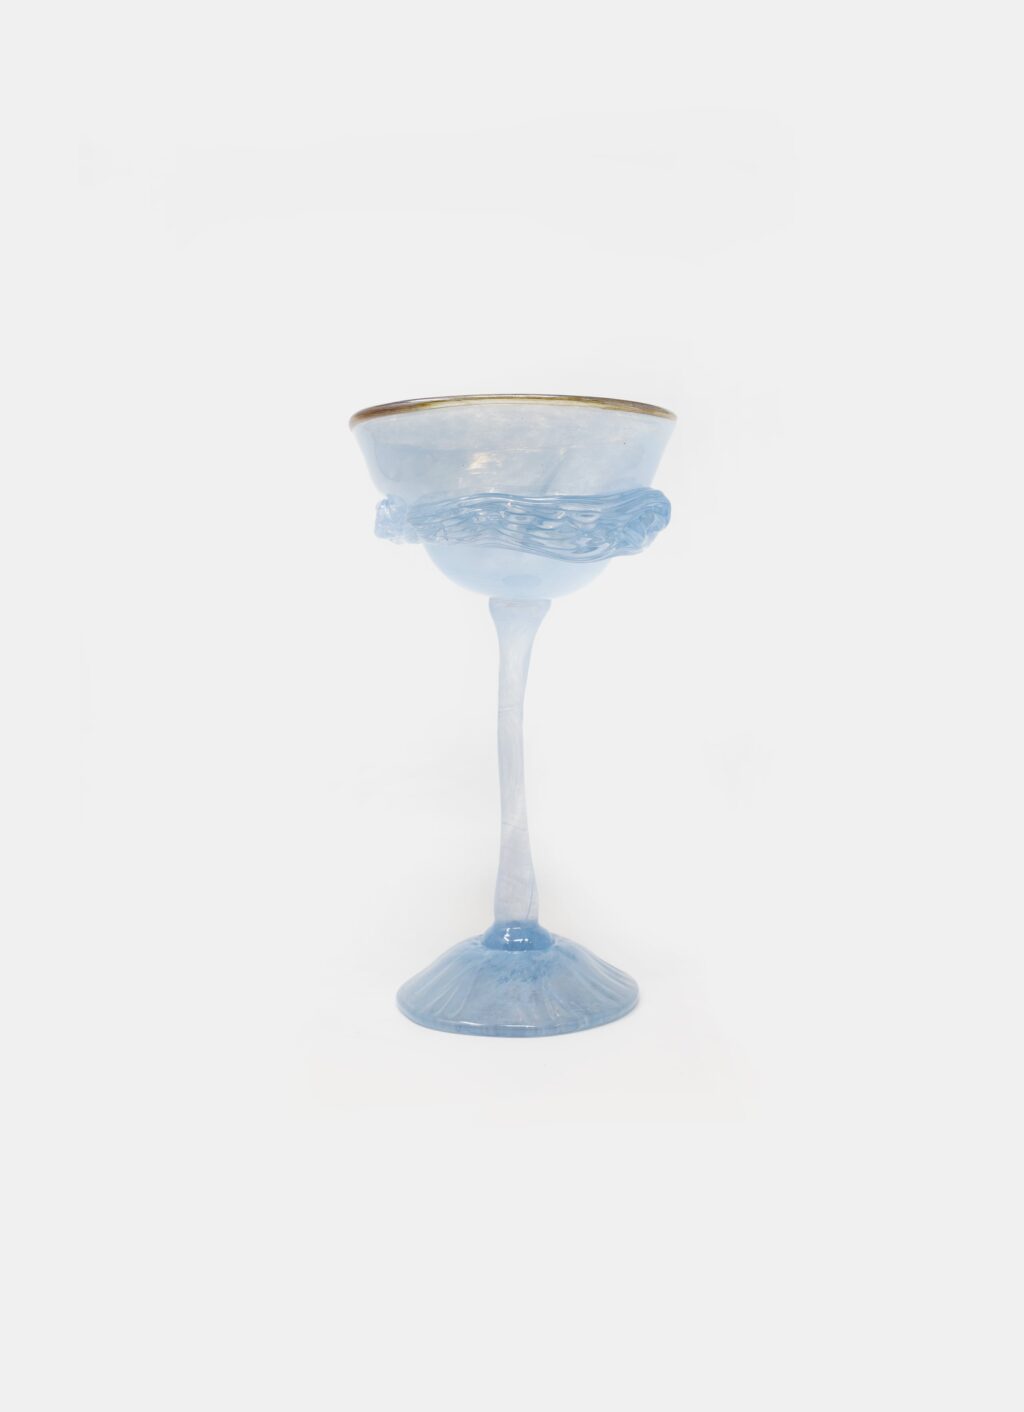 Gunilla Kihlgren - Handblown Champagne Glass - blue with gold rim